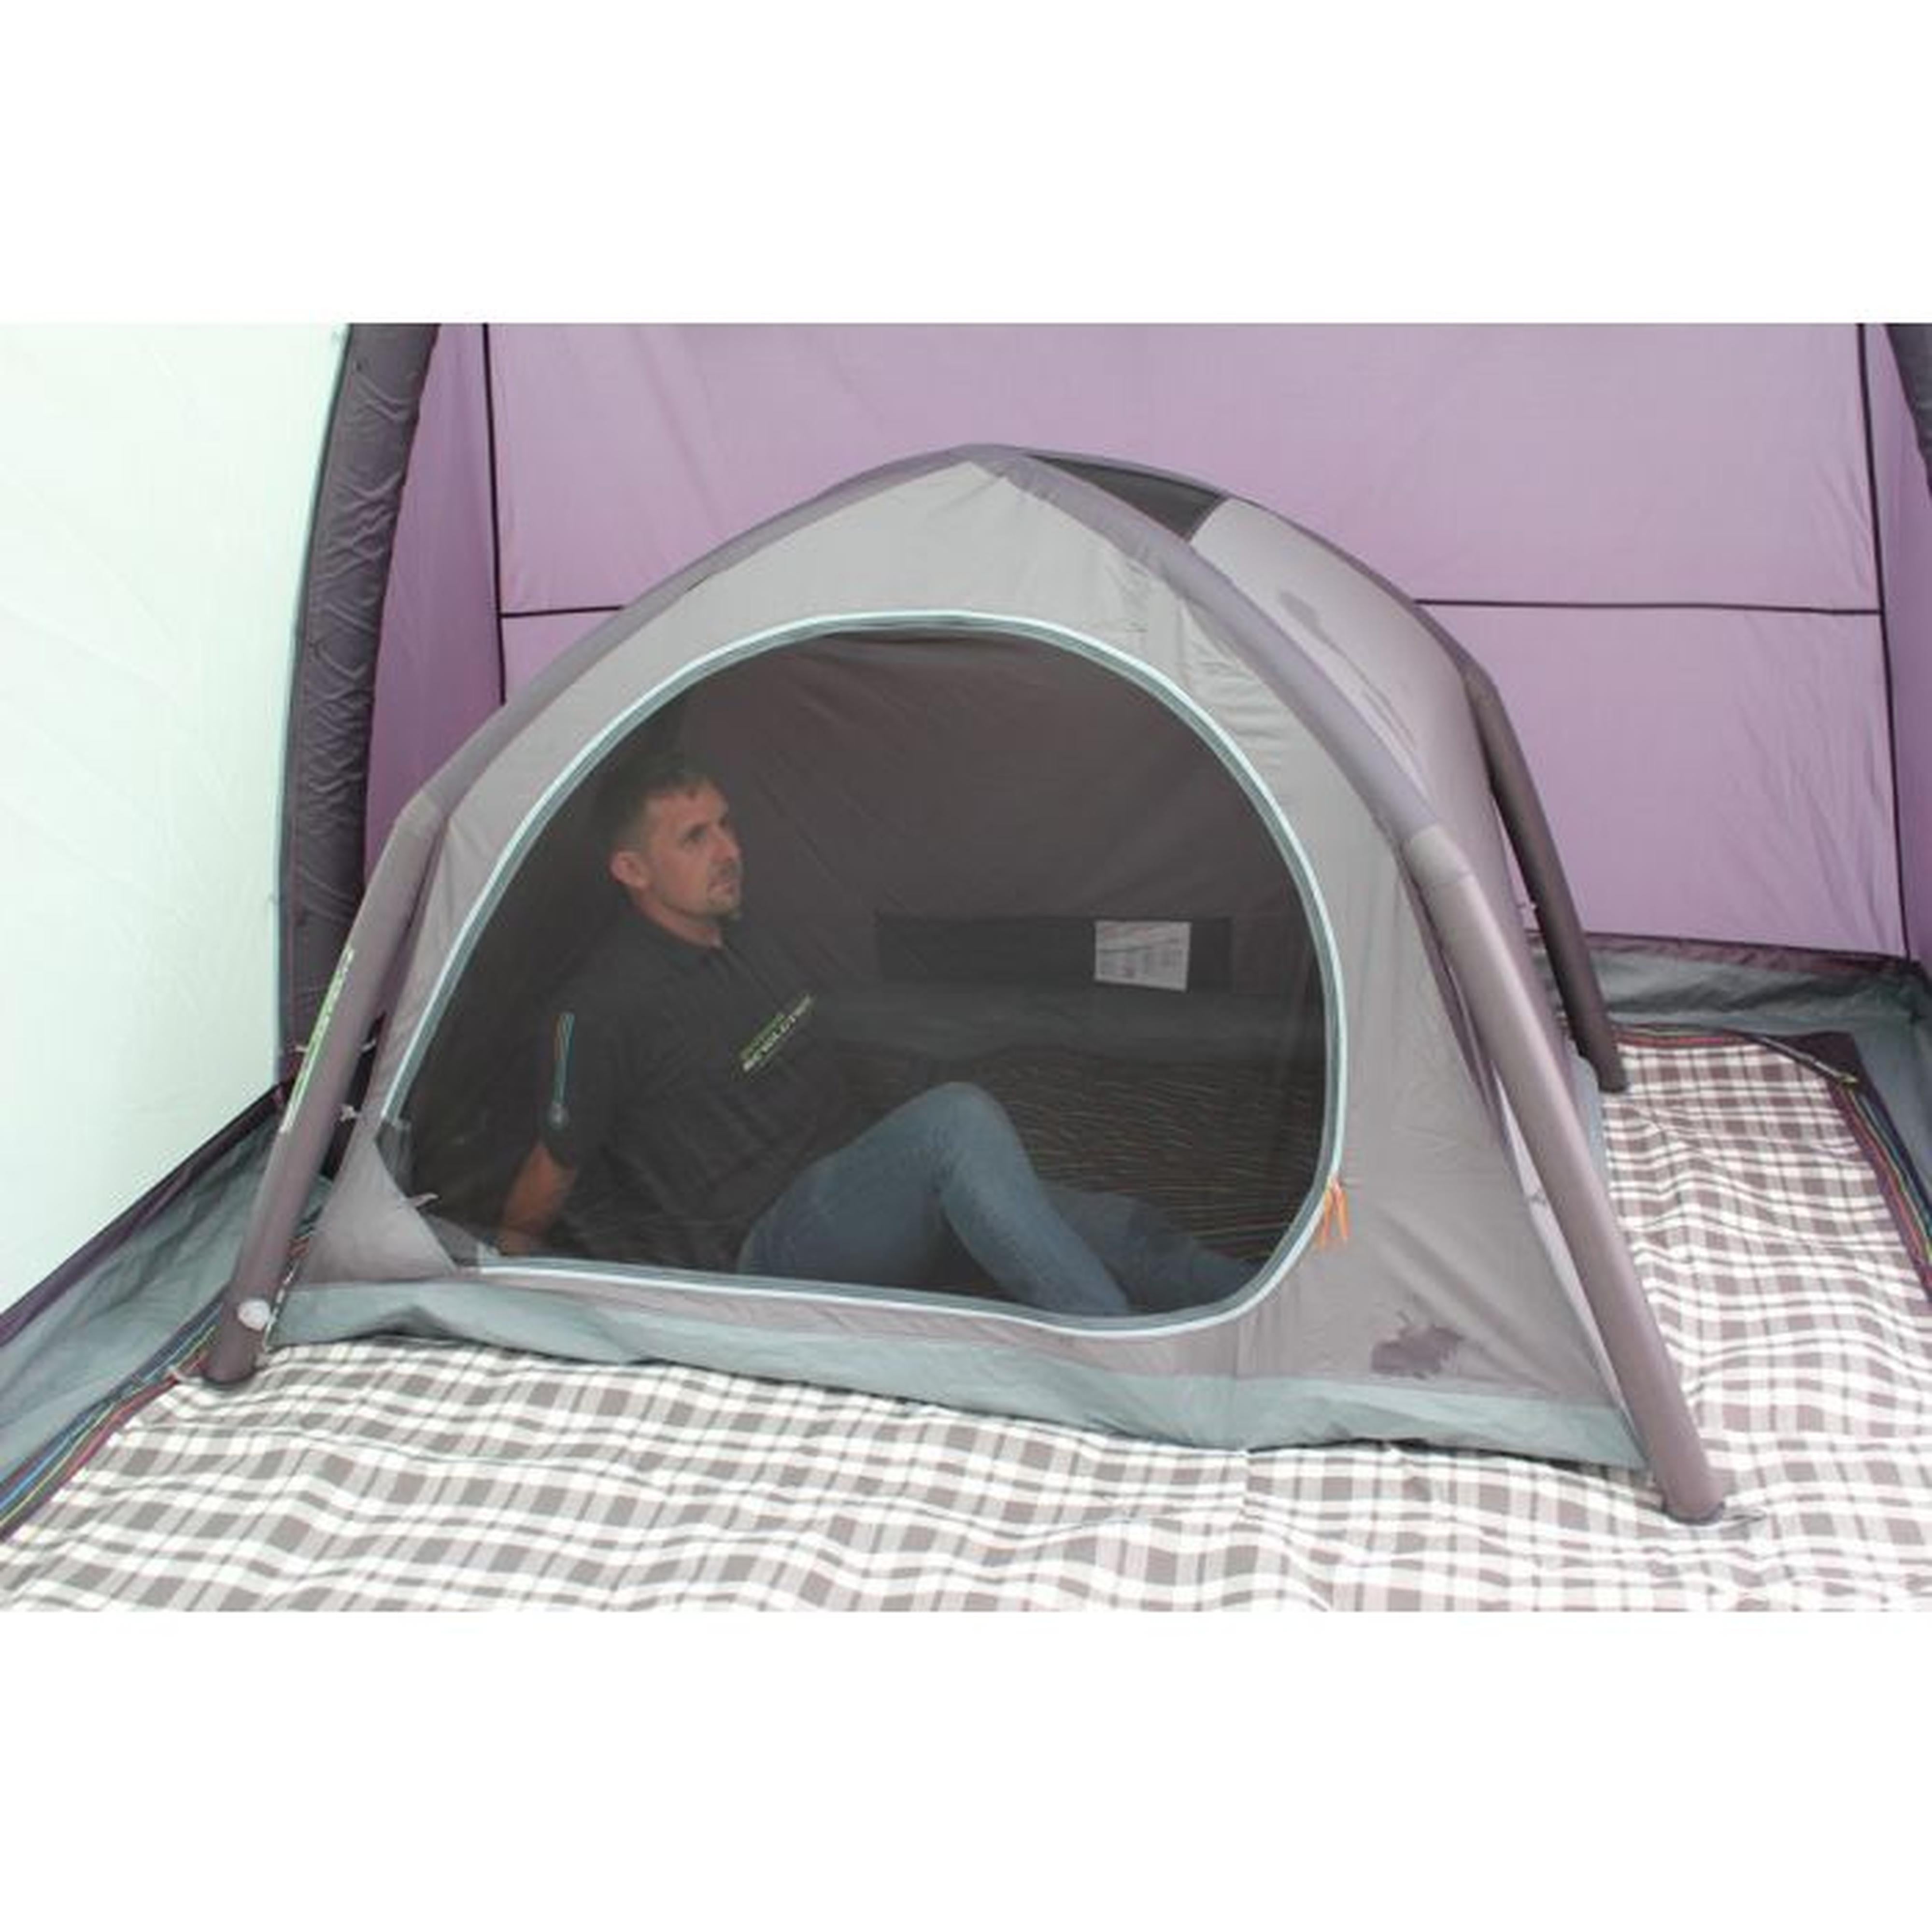 Outdoor Revolution Airpod Inner Tent